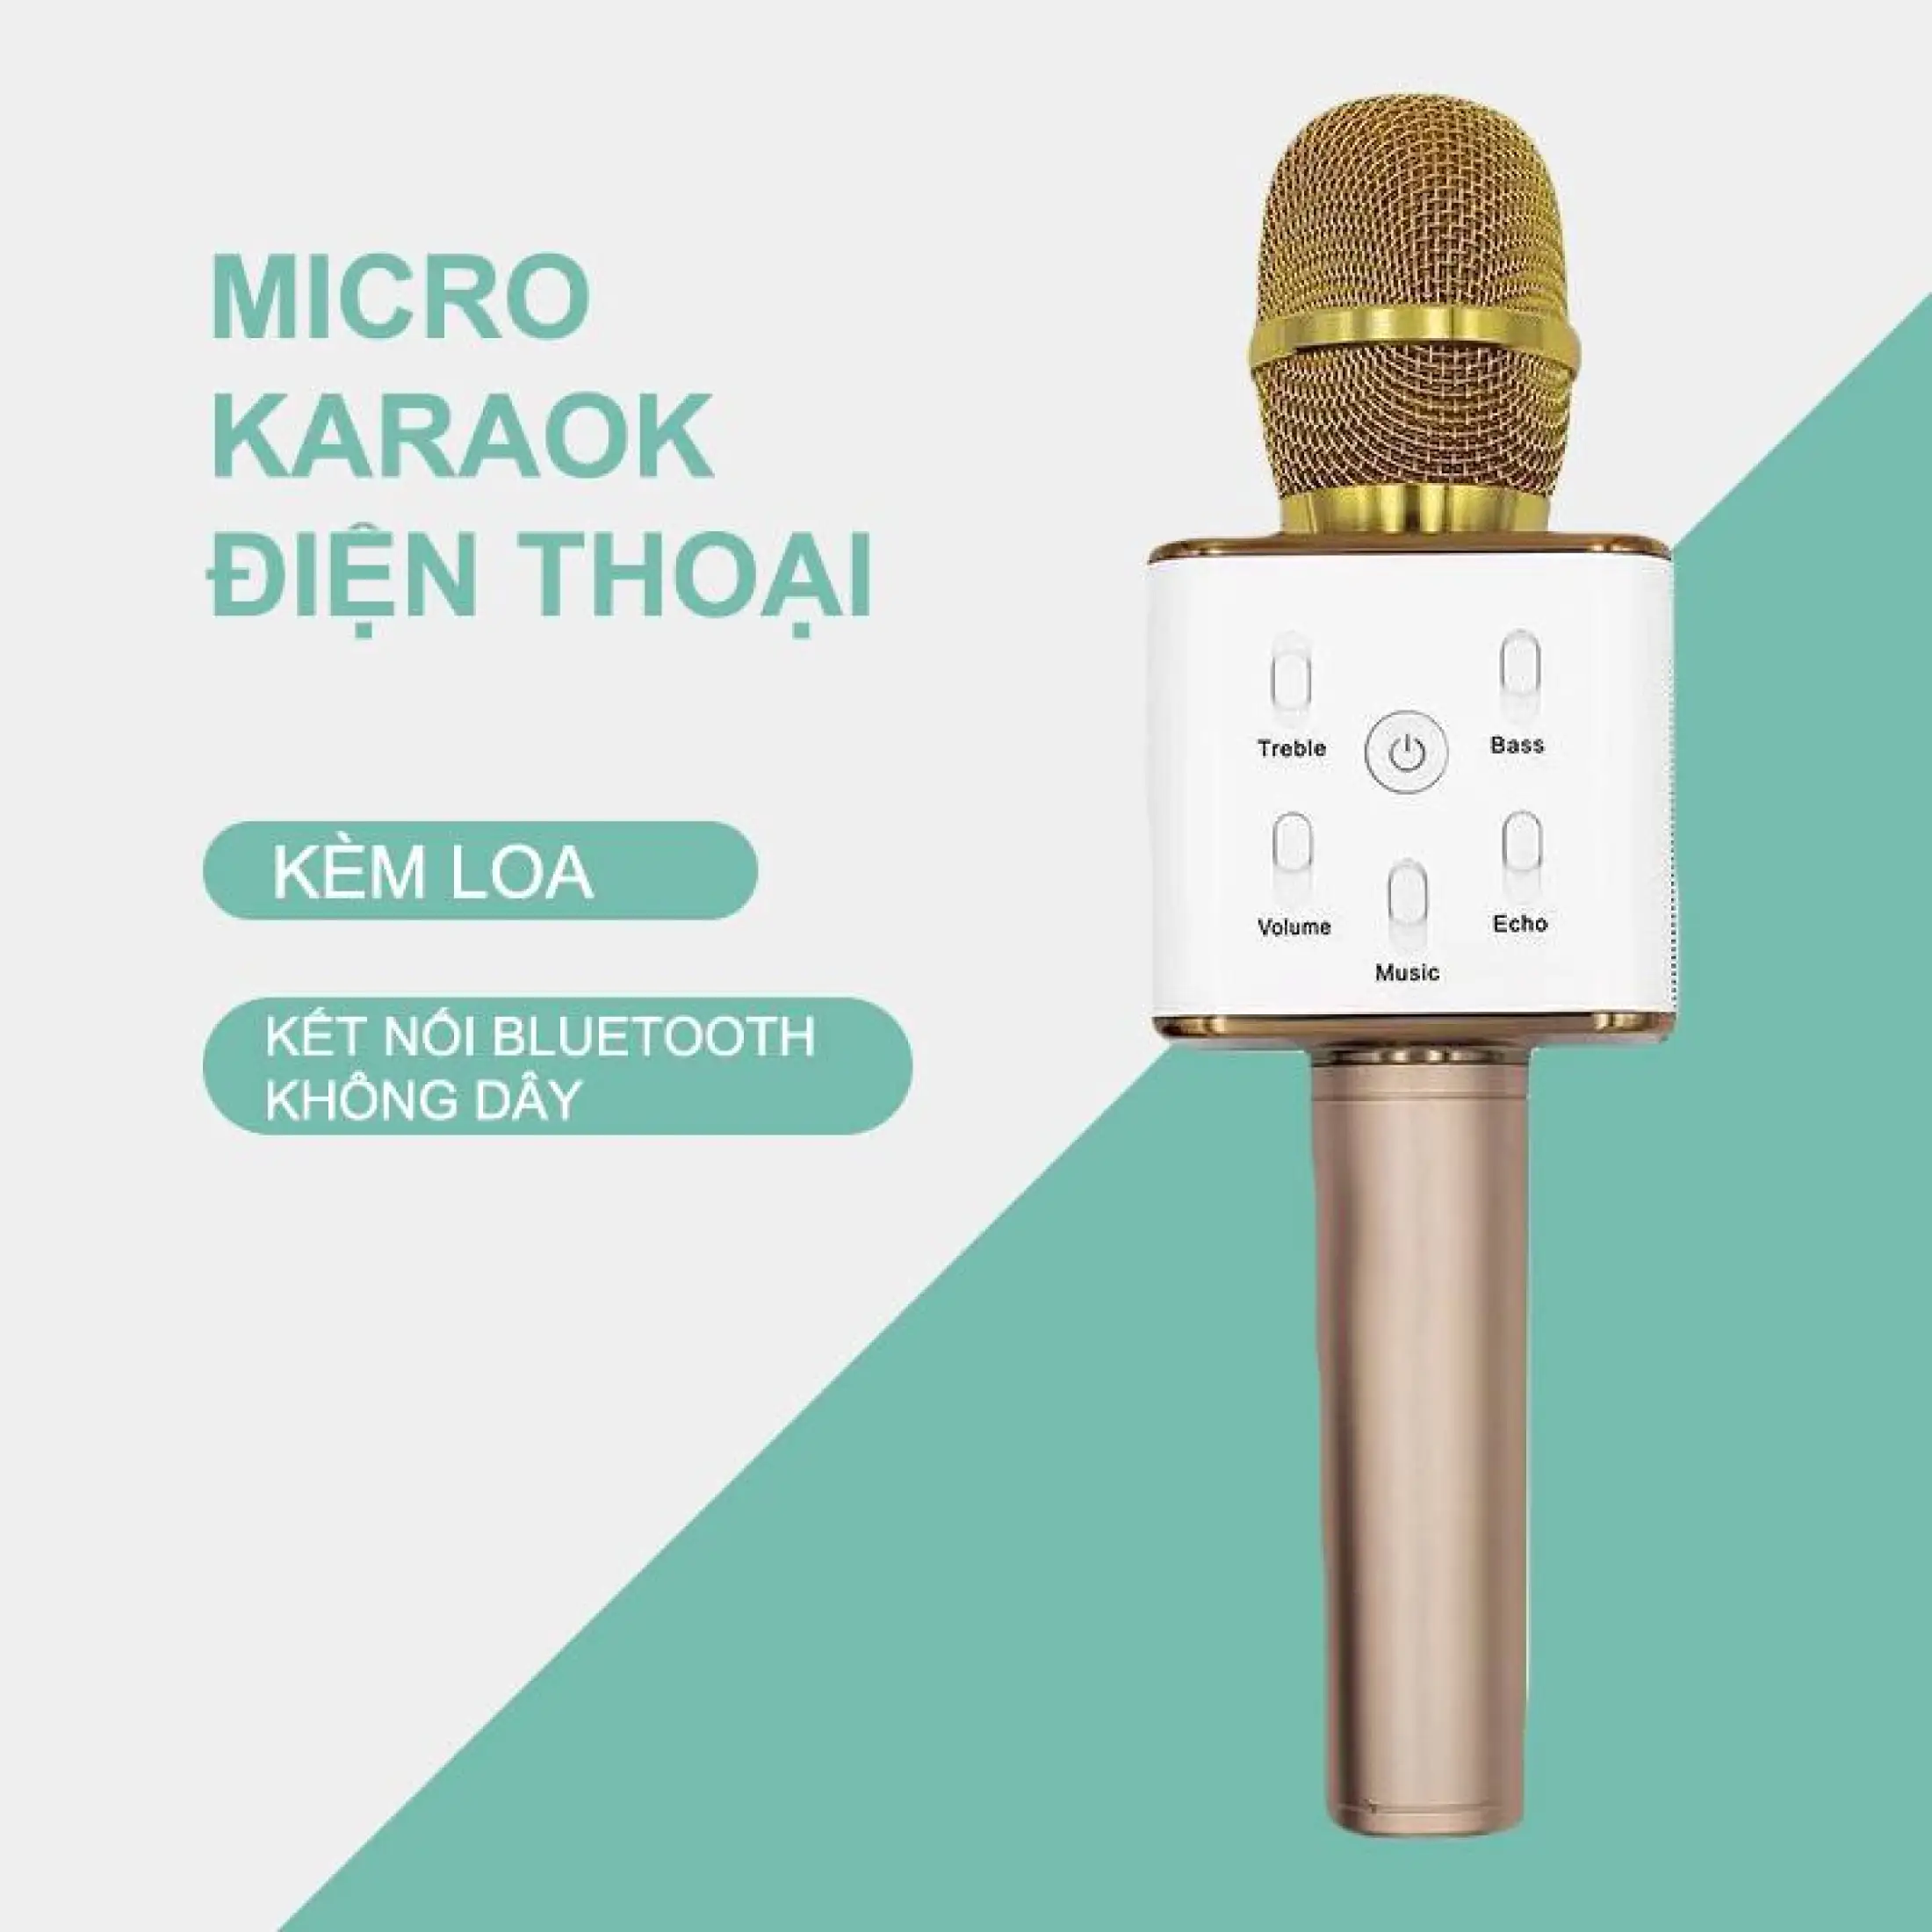 Micro karaoke tích hợp Loa Bluetooth Q7 Micro karaoke bluetooth  tặng 1 spinner